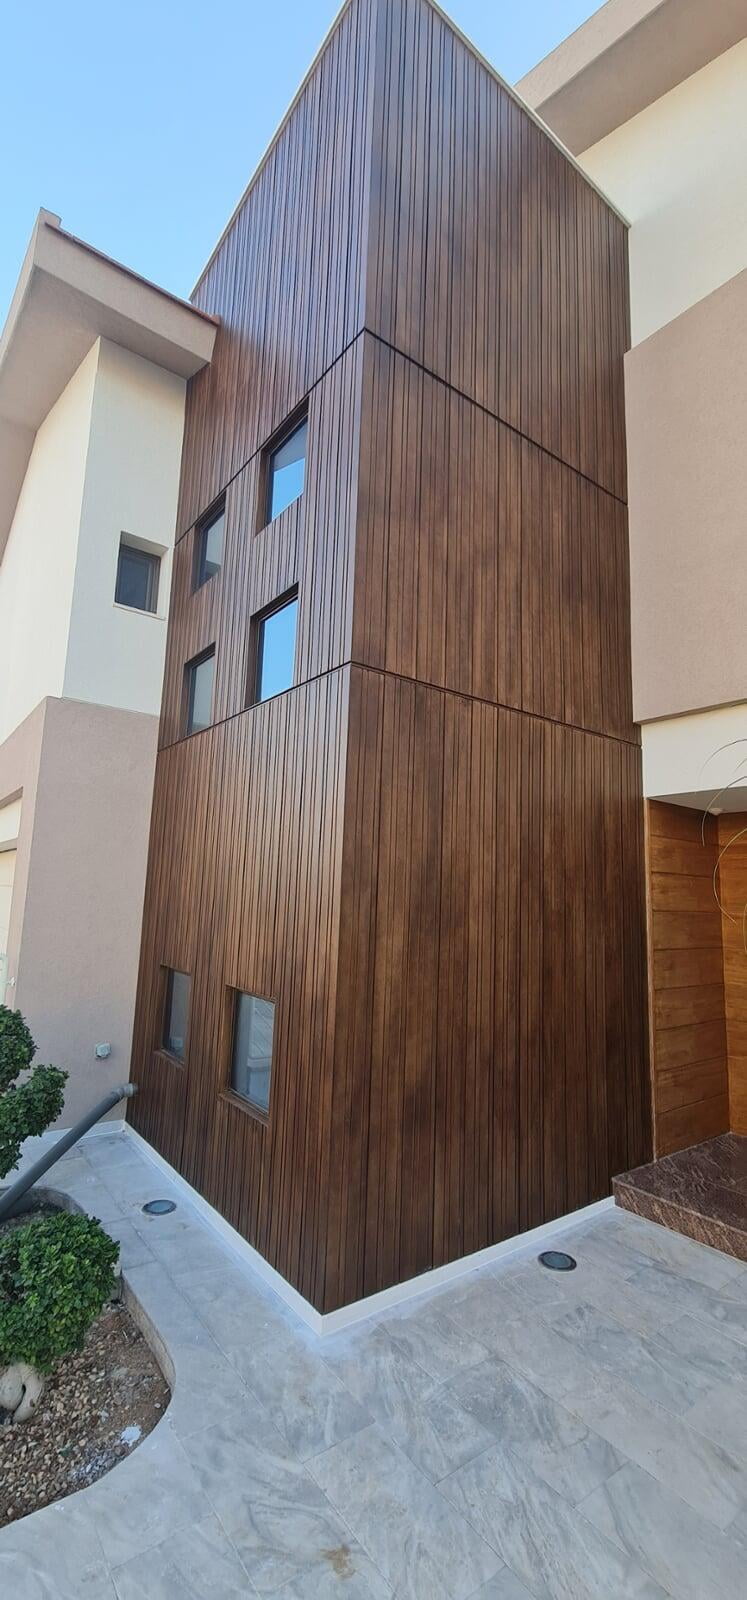 SHERA Deline fibre cement plank exterior siding application